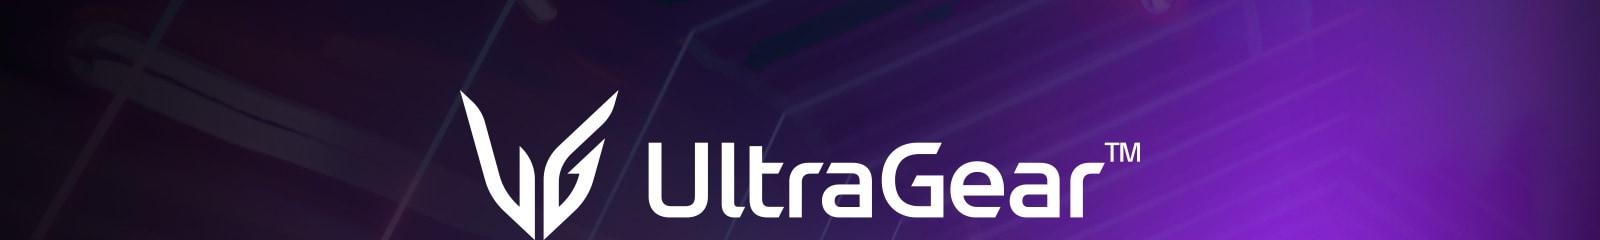 mnt-ultragear-27gq50f-01-1-lg-ultragear-desktop